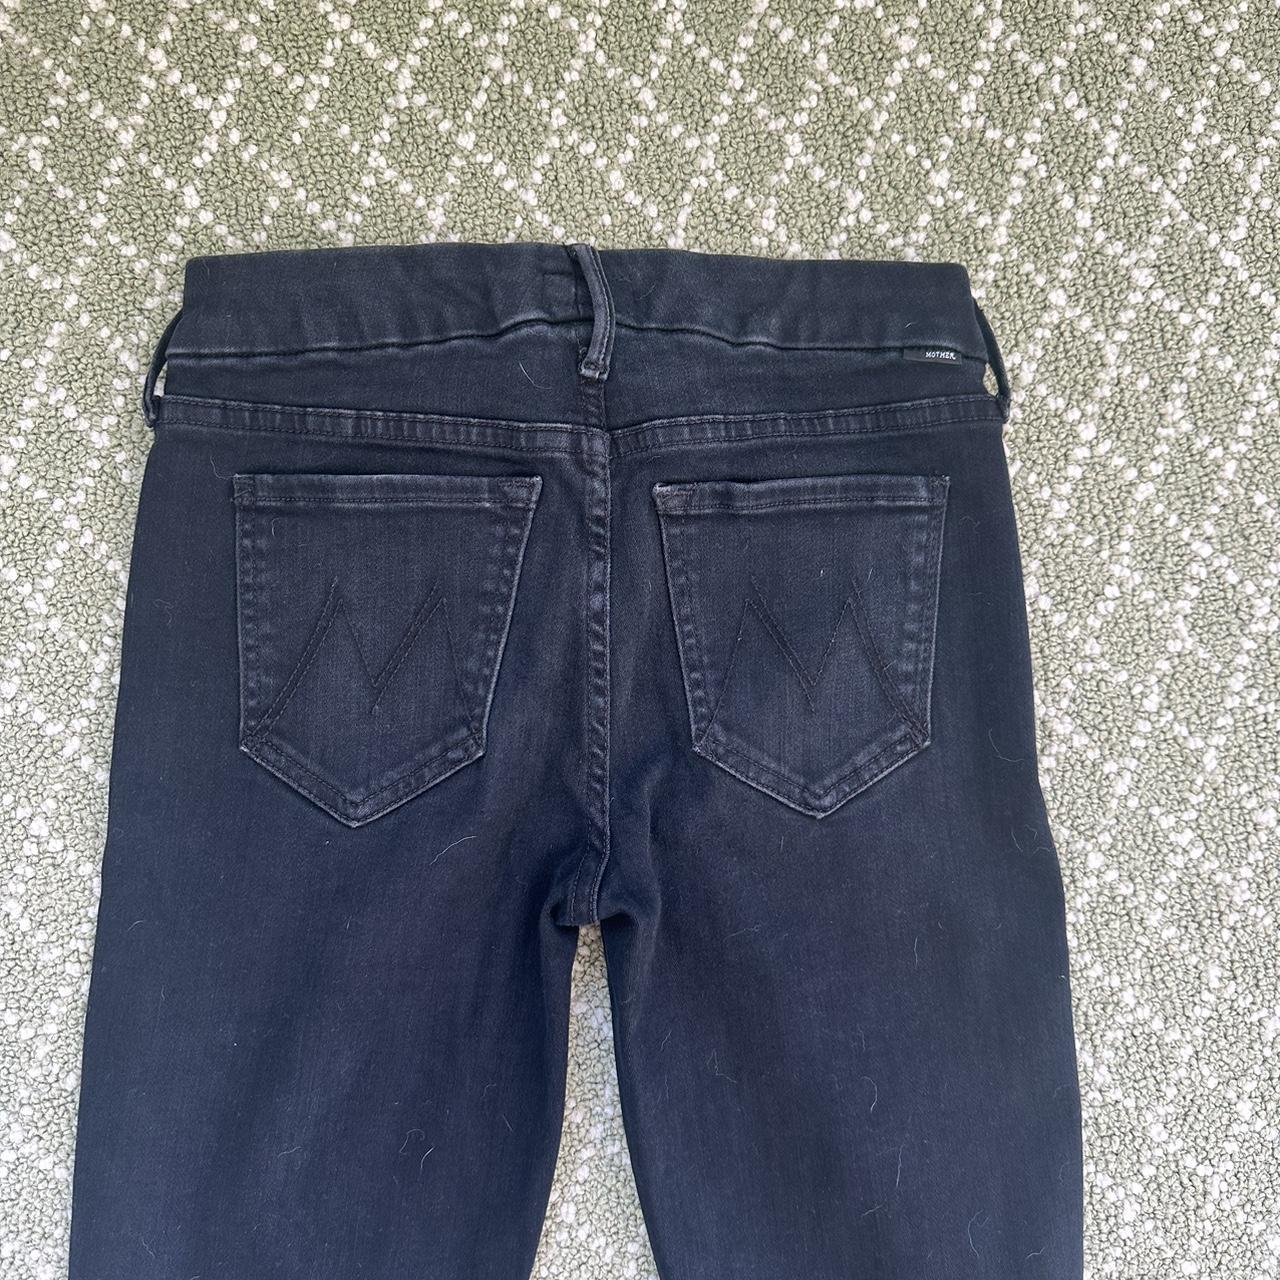 Mother denim size 25 low waist skinny jeans black - Depop